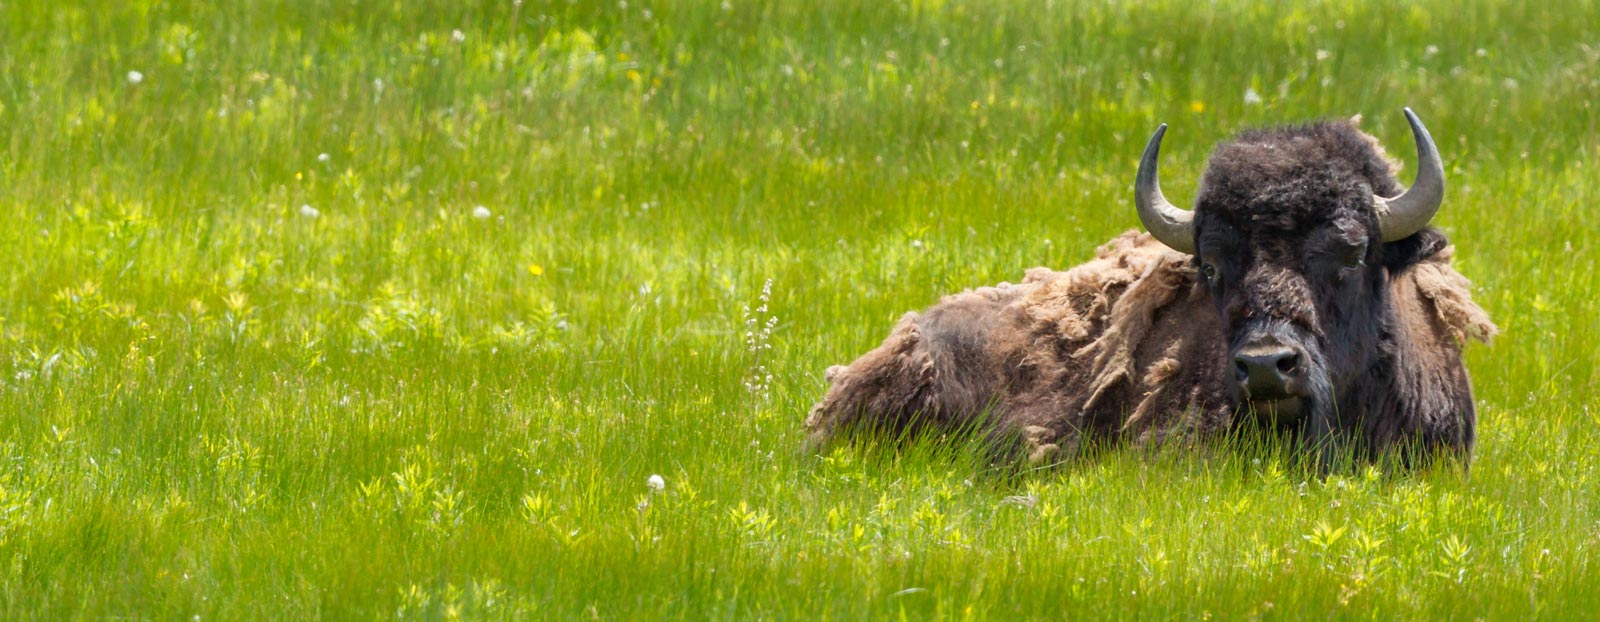 Natural habitat of bison grass